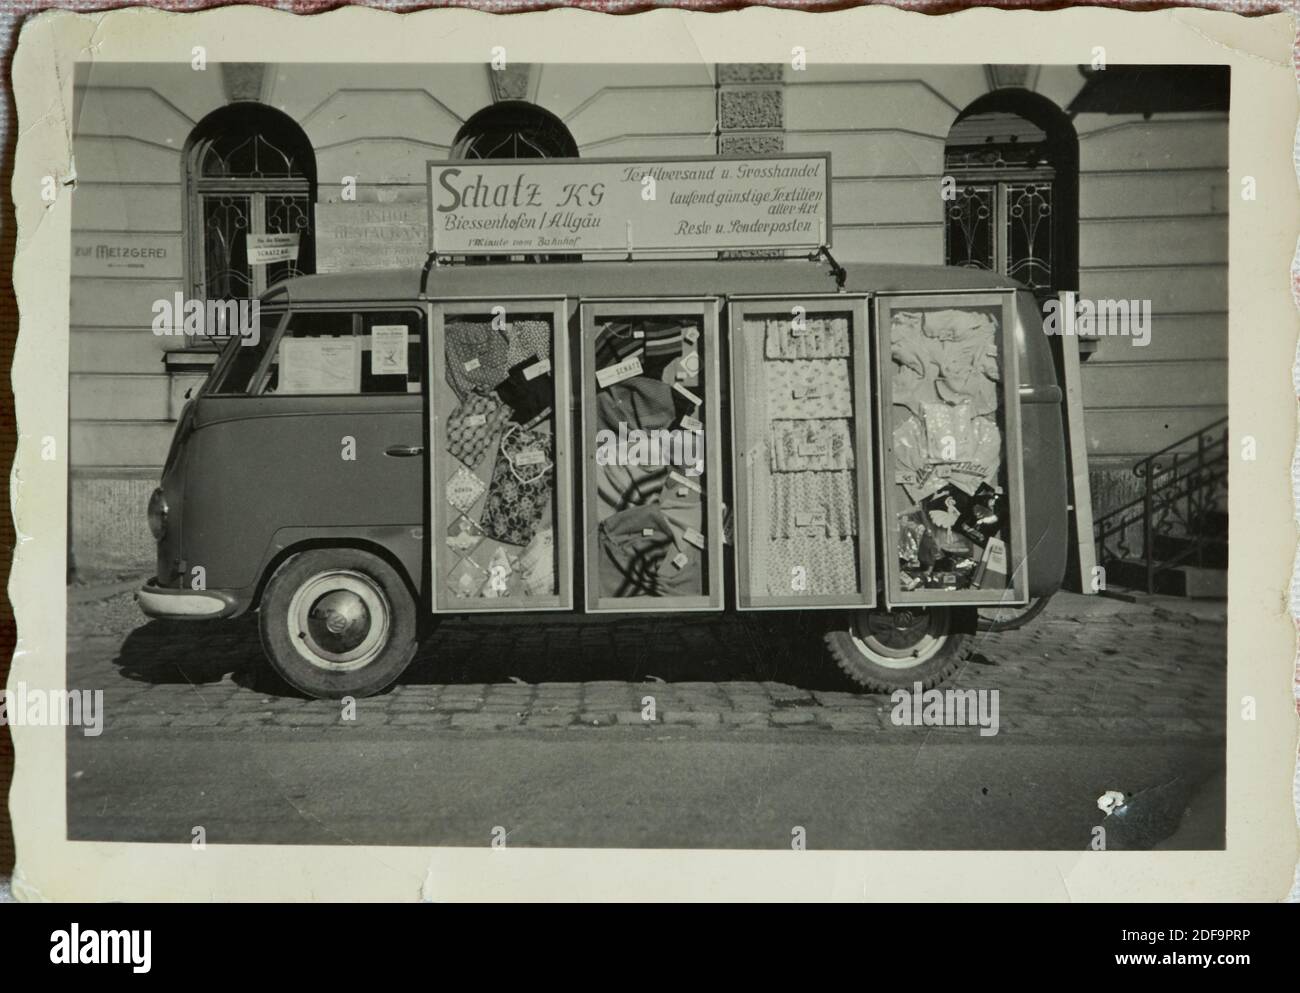 Foto storica: VW Bus oldtimer 1958 come negozio di tessuti mobili di Schatz KG Textilversand und Grosshandel a Biessenhofen, Baviera. Riproduzione a Marktoberdorf, Germania, 26 ottobre 2020. © Peter Schatz / Alamy foto d'archivio Foto Stock